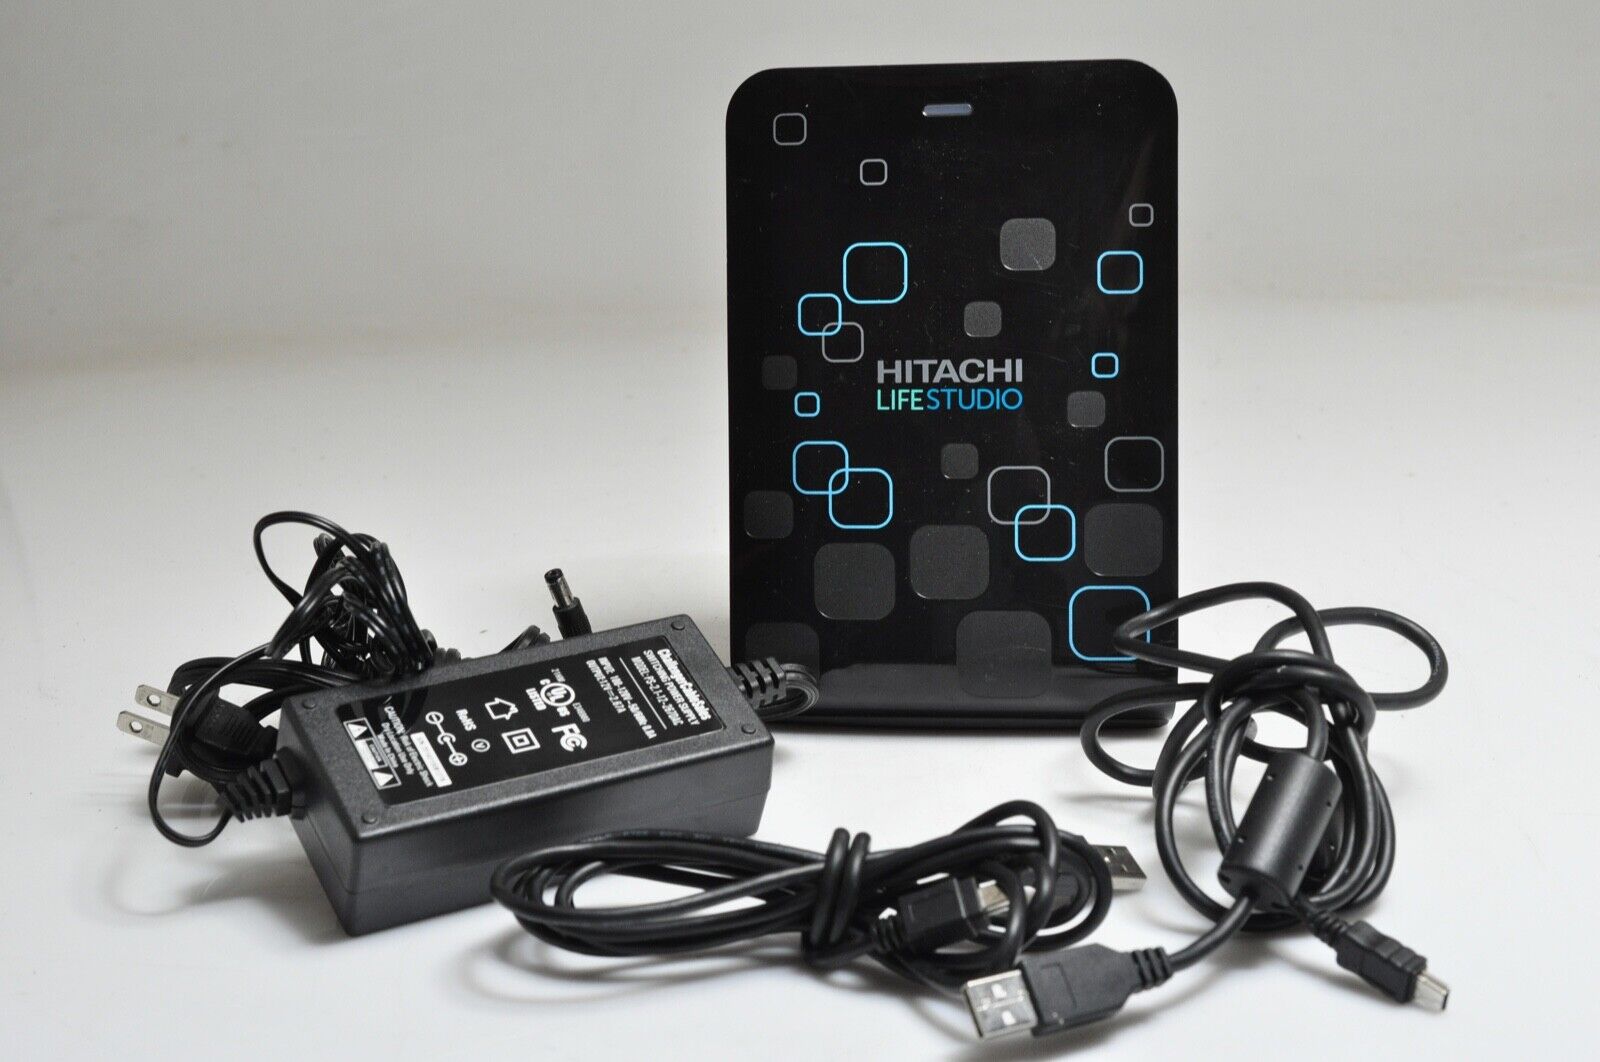 Hitachi Life Studio Desk 500 GB Hard Drive-AC and USB cord- Working